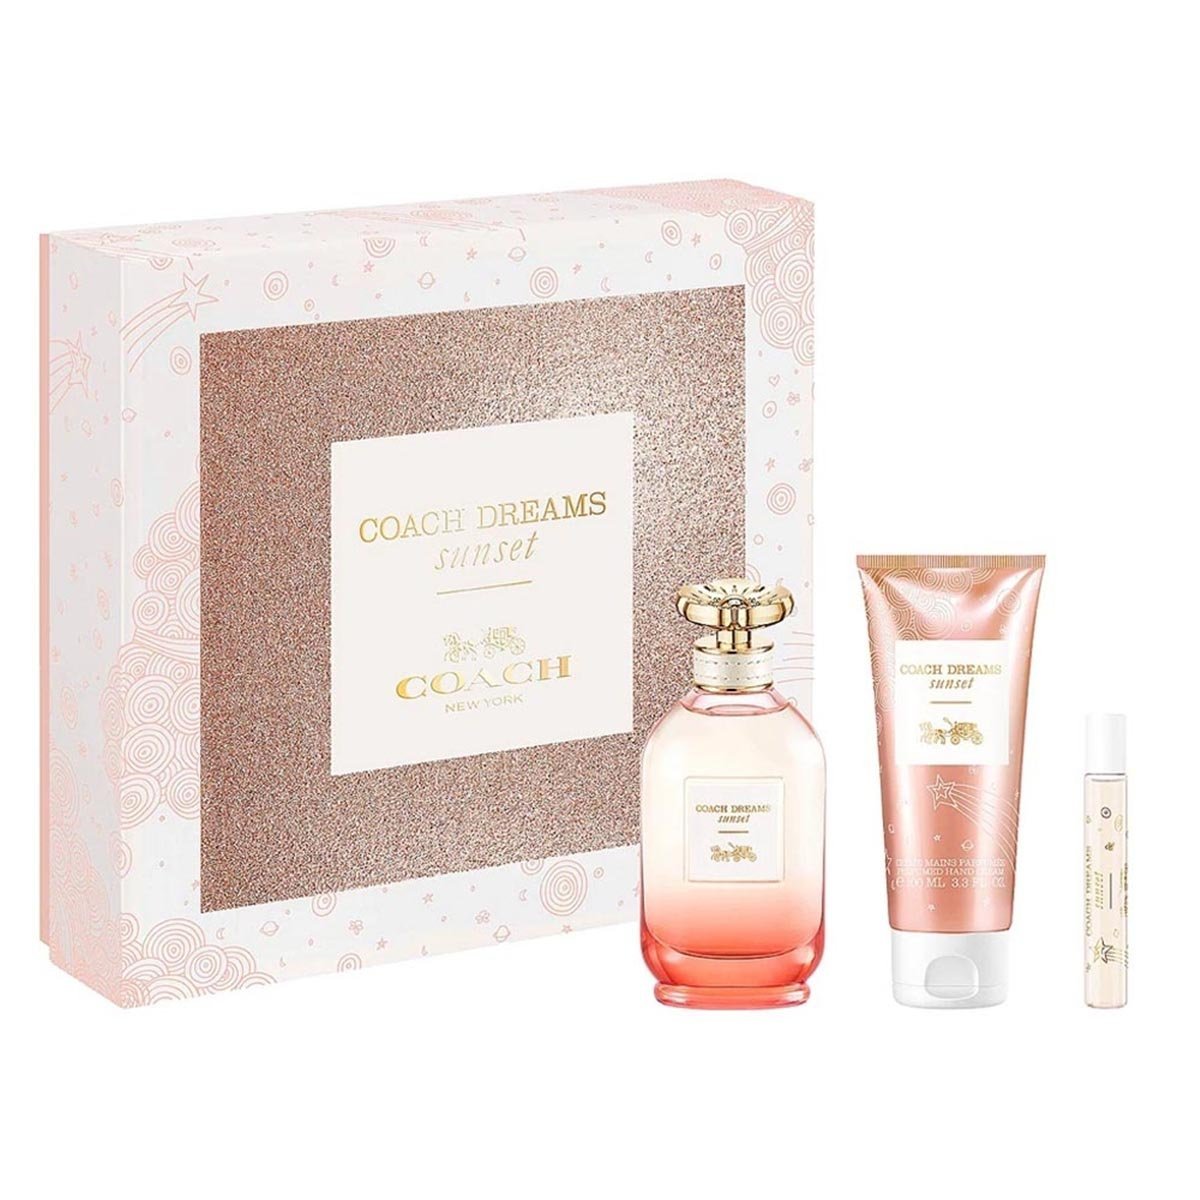 Coach Sunset Dreams Gift Set - My Perfume Shop Australia